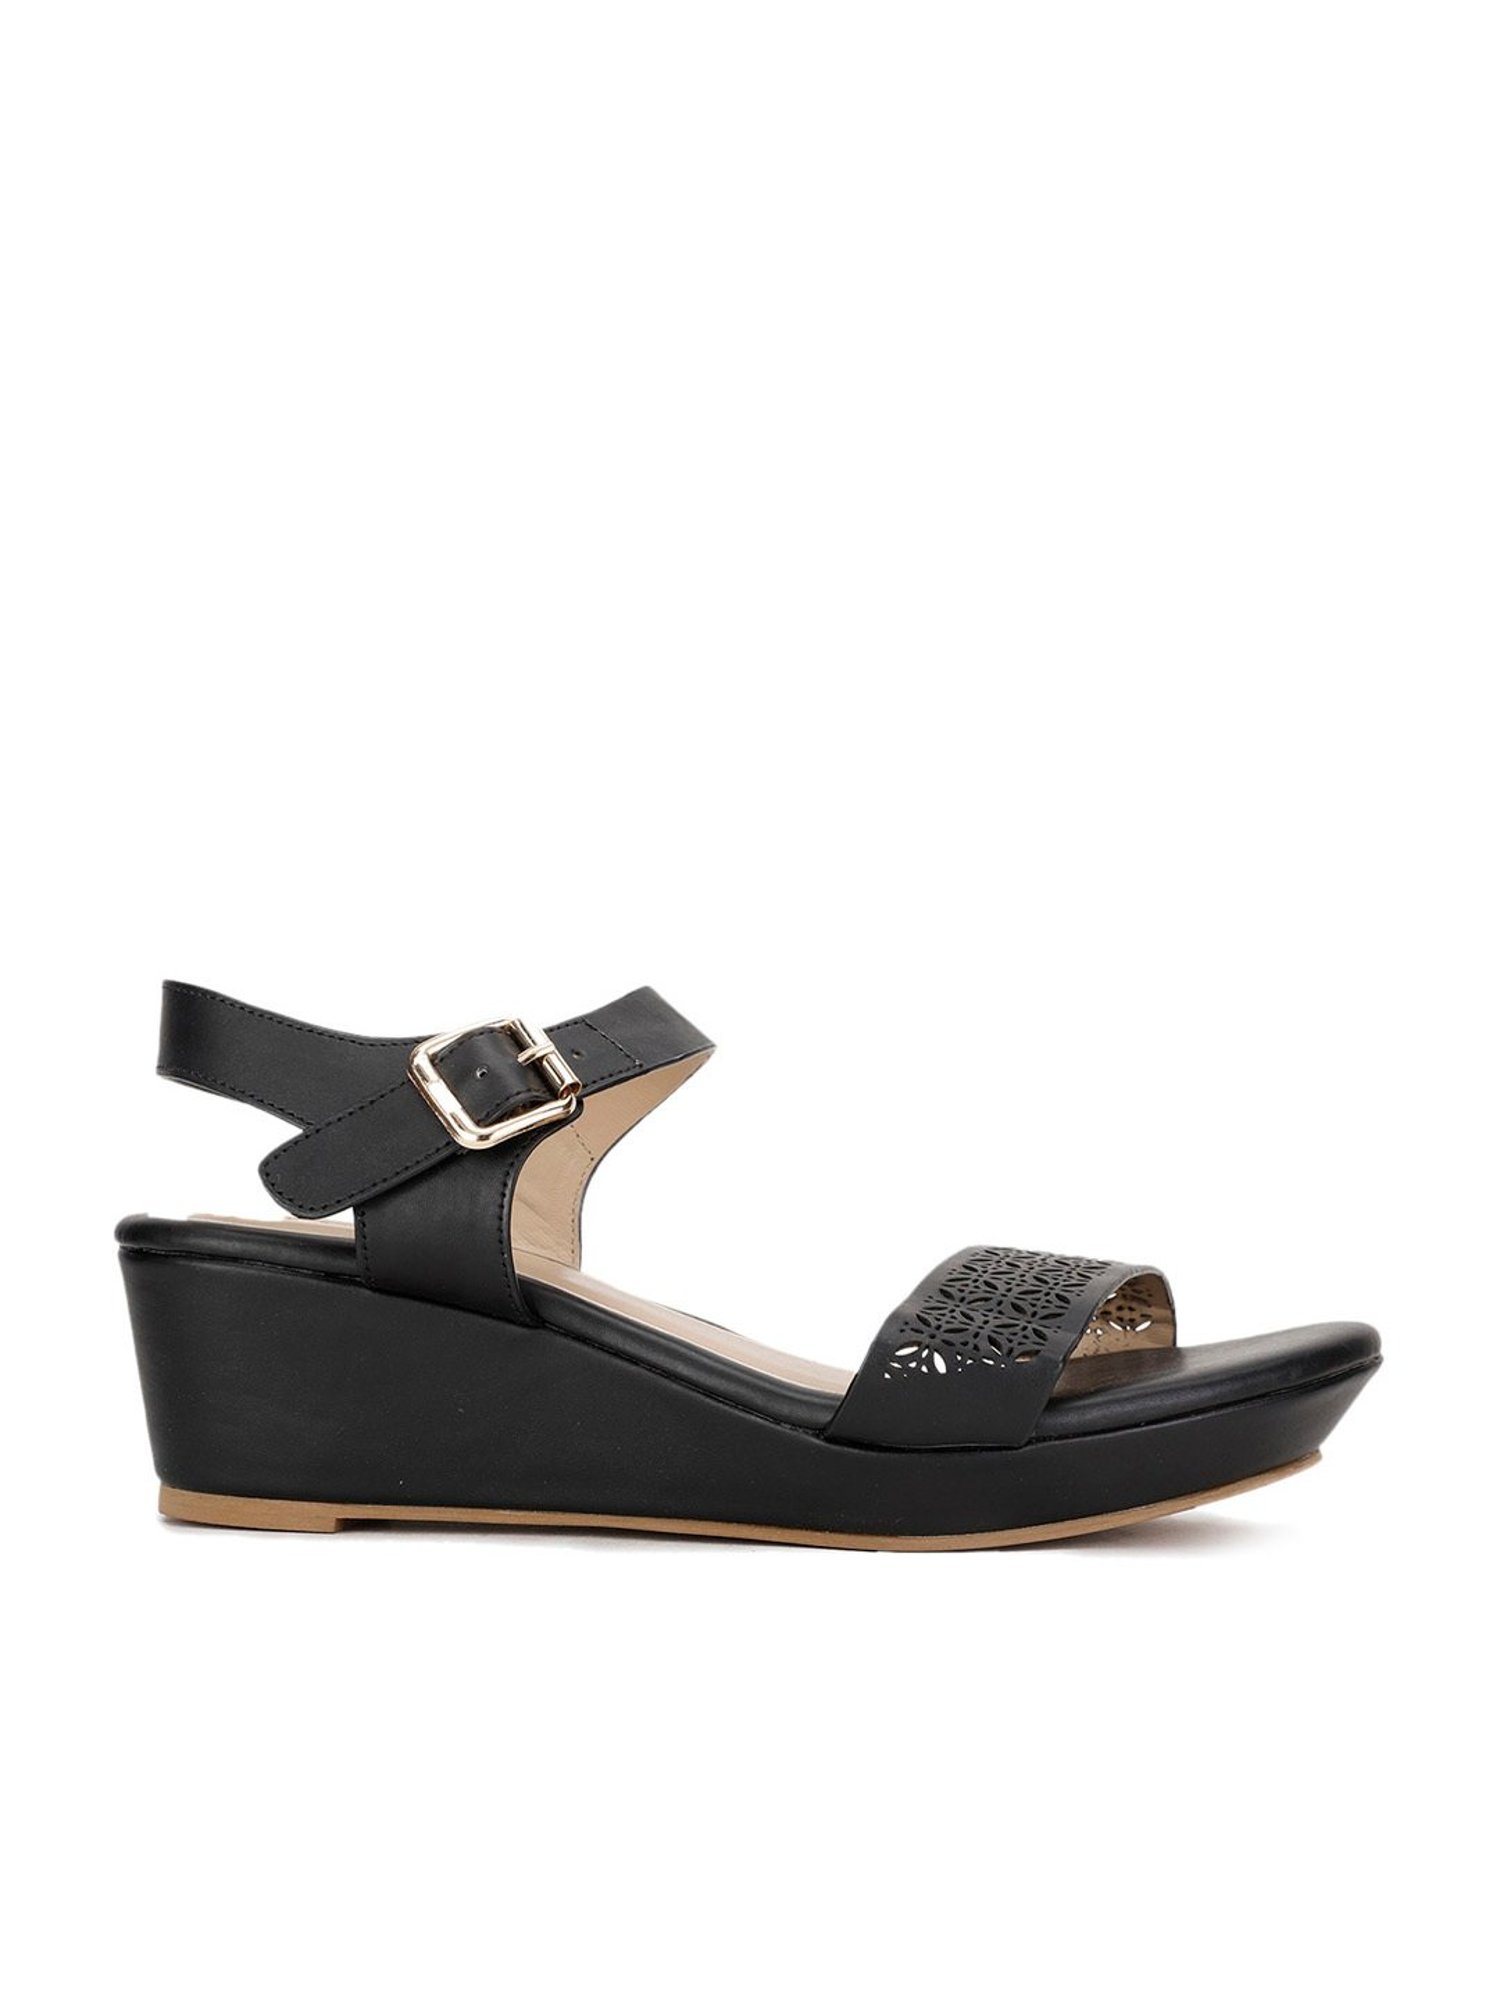 Buy Black Heeled Sandals for Women by Davinchi Online | Ajio.com